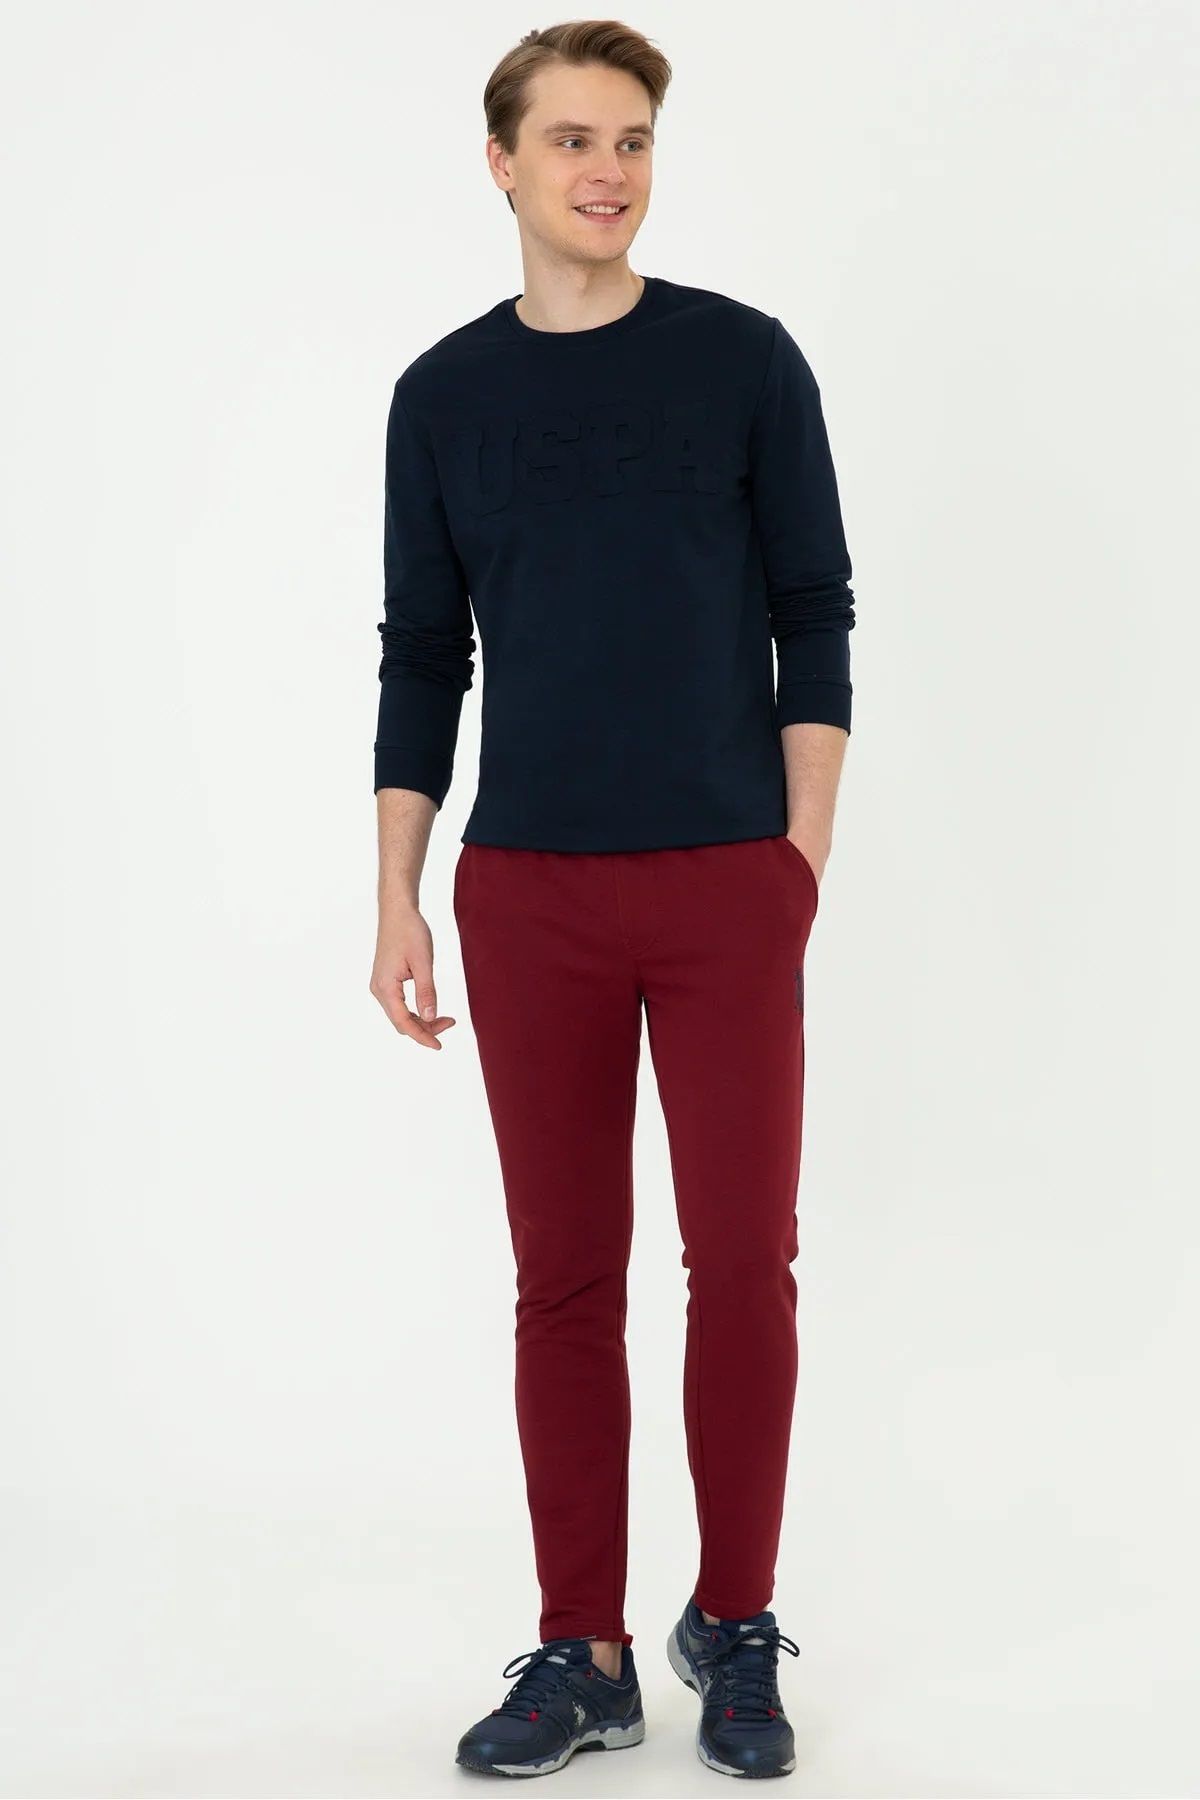 U.S. POLO ASSN. casual_trousers_men_westernwear : Buy U.S. POLO ASSN. Men  Khaki Flat Front Solid Casual Trousers Online | Nykaa Fashion